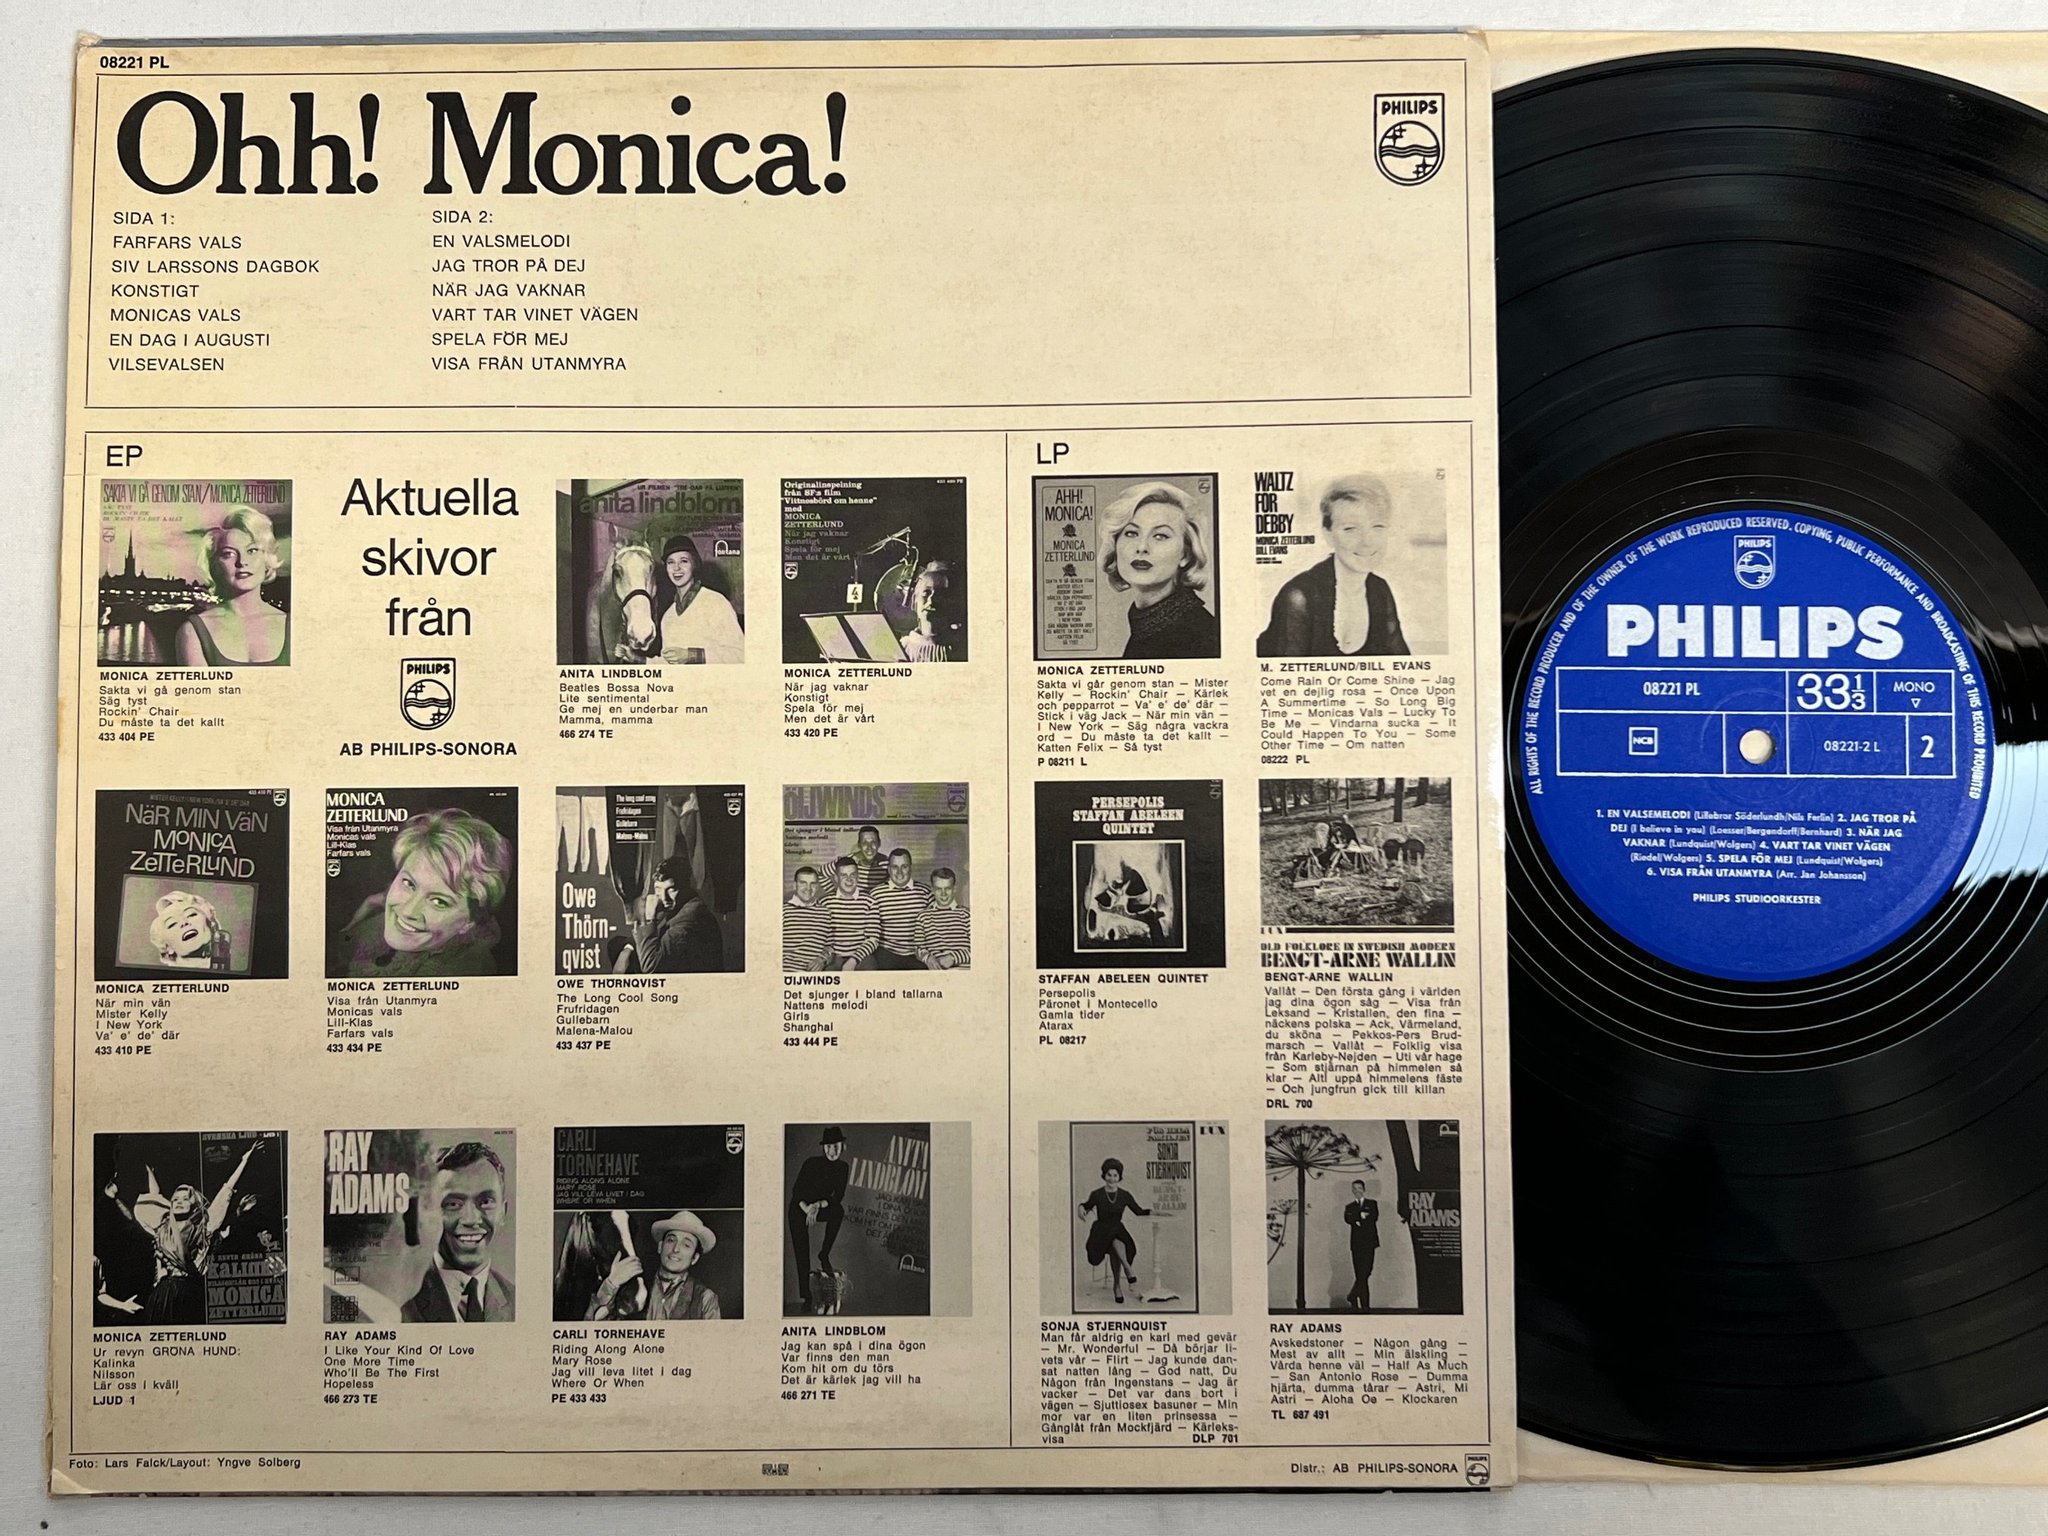 Omslagsbild för skivan MONICA ZETTERLUND Ohh! Monica! LP -64 Swe PHILIPS 08221 PL ** rare **